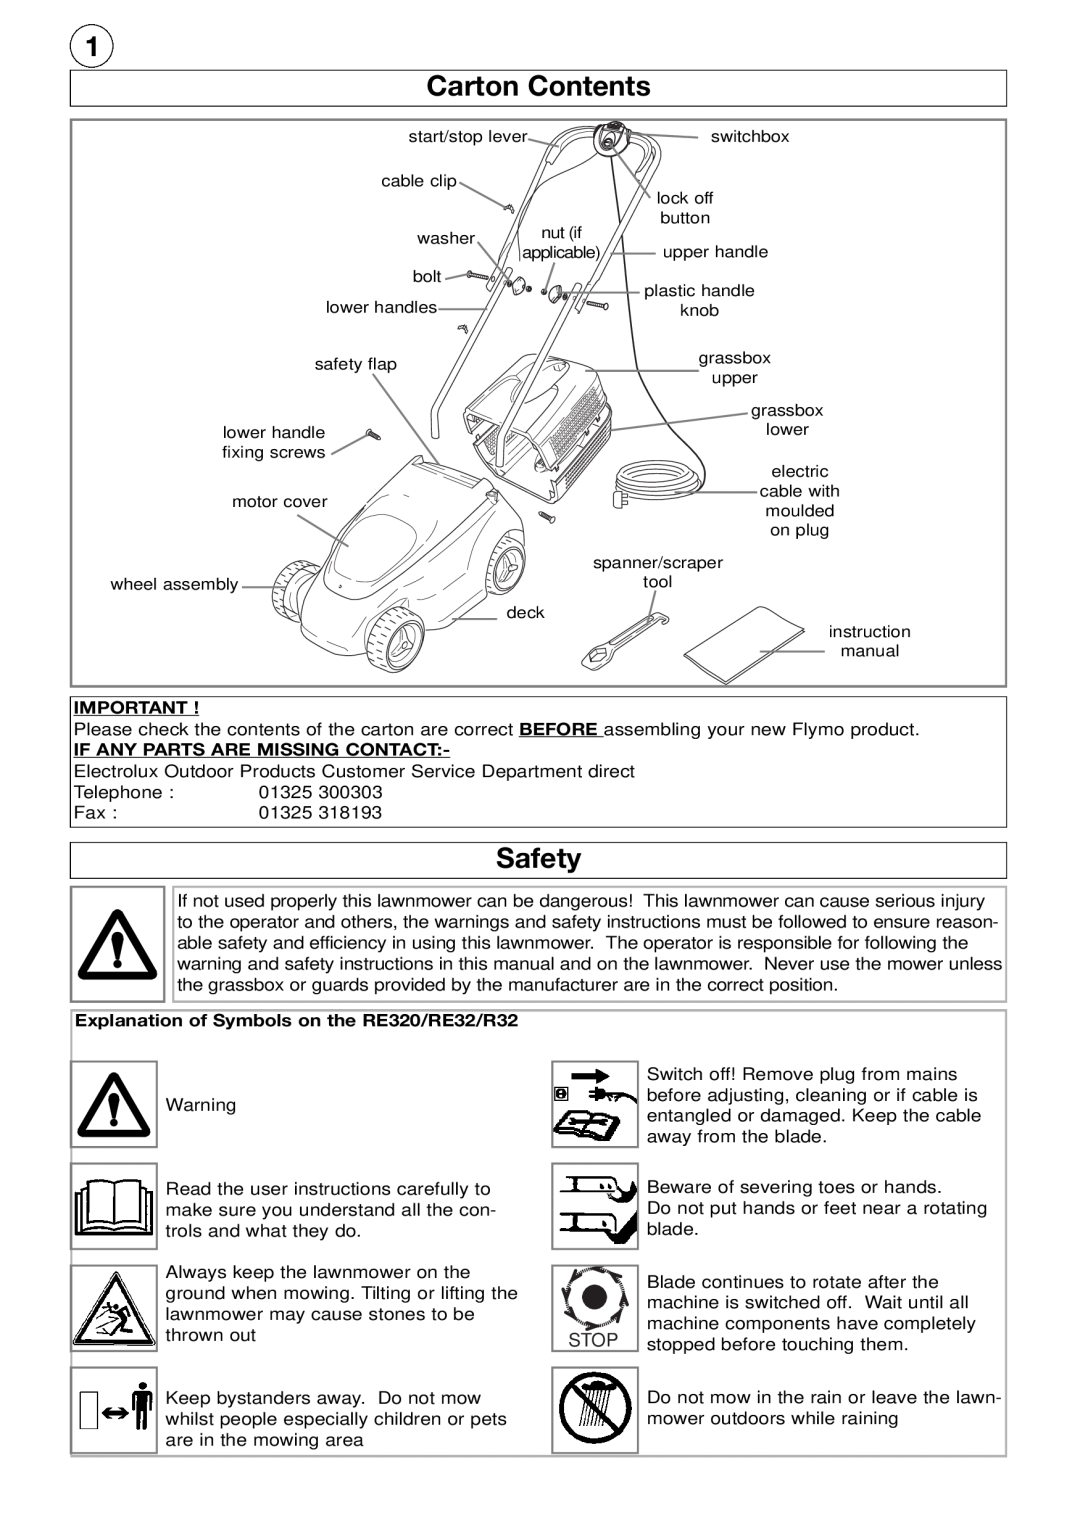 Flymo R32 manual Carton Contents, Safety, Stop 